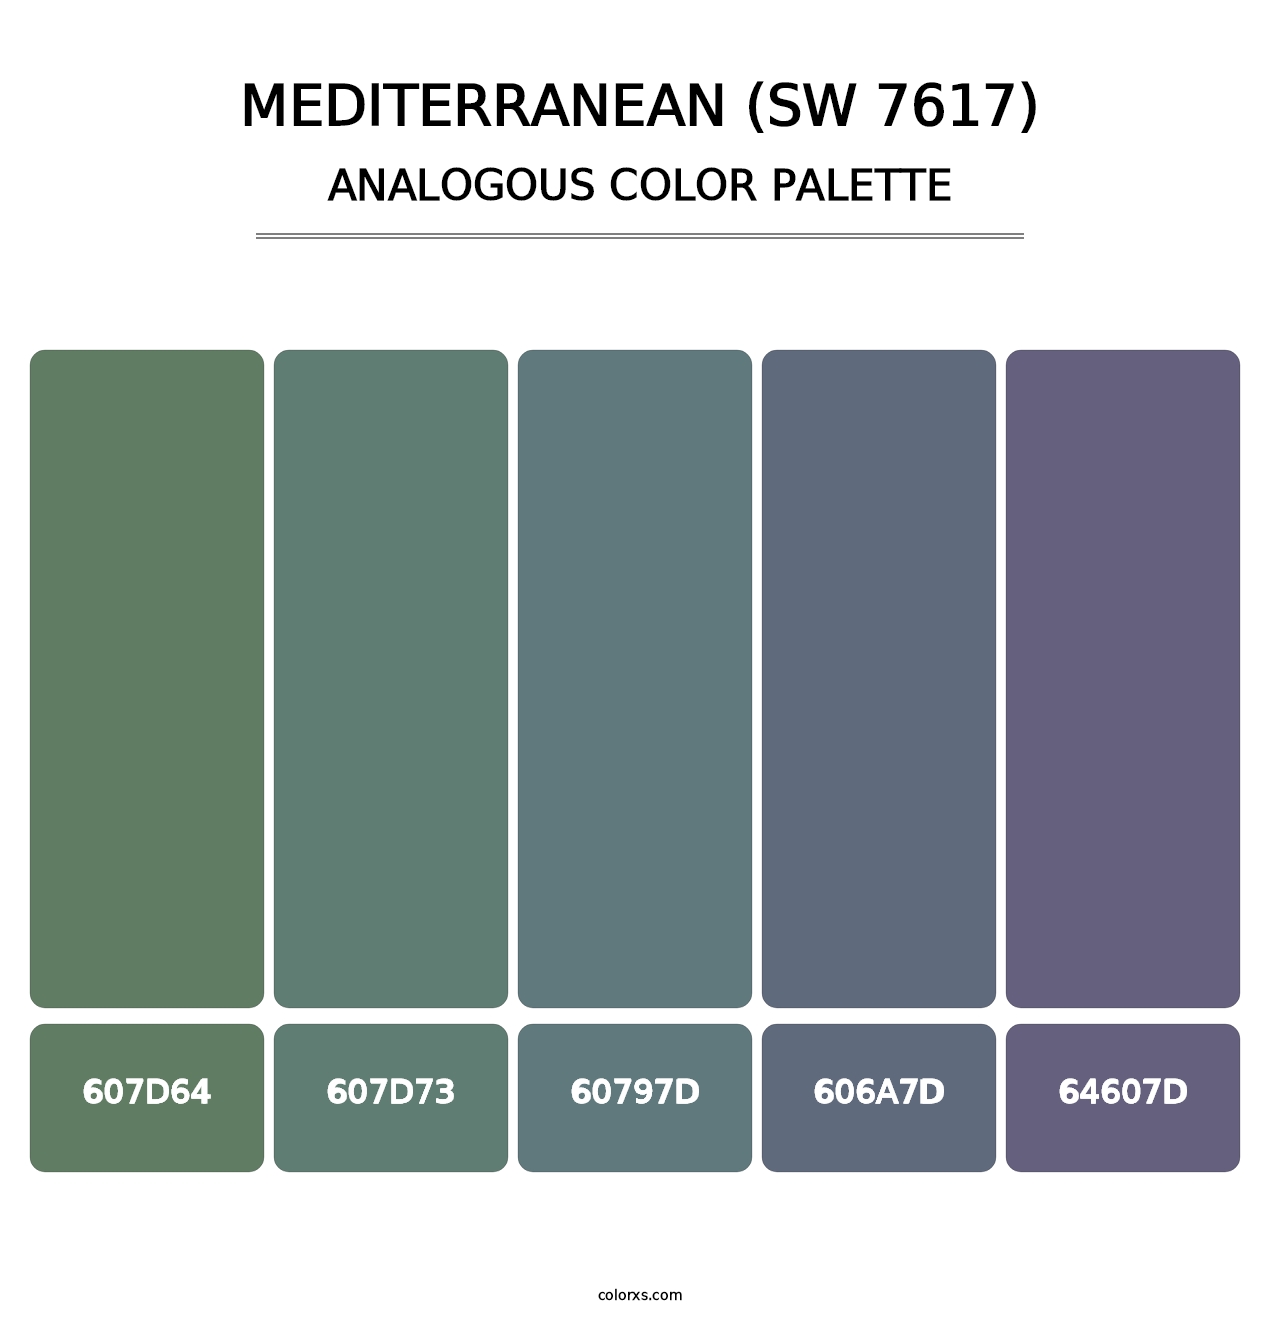 Mediterranean (SW 7617) - Analogous Color Palette